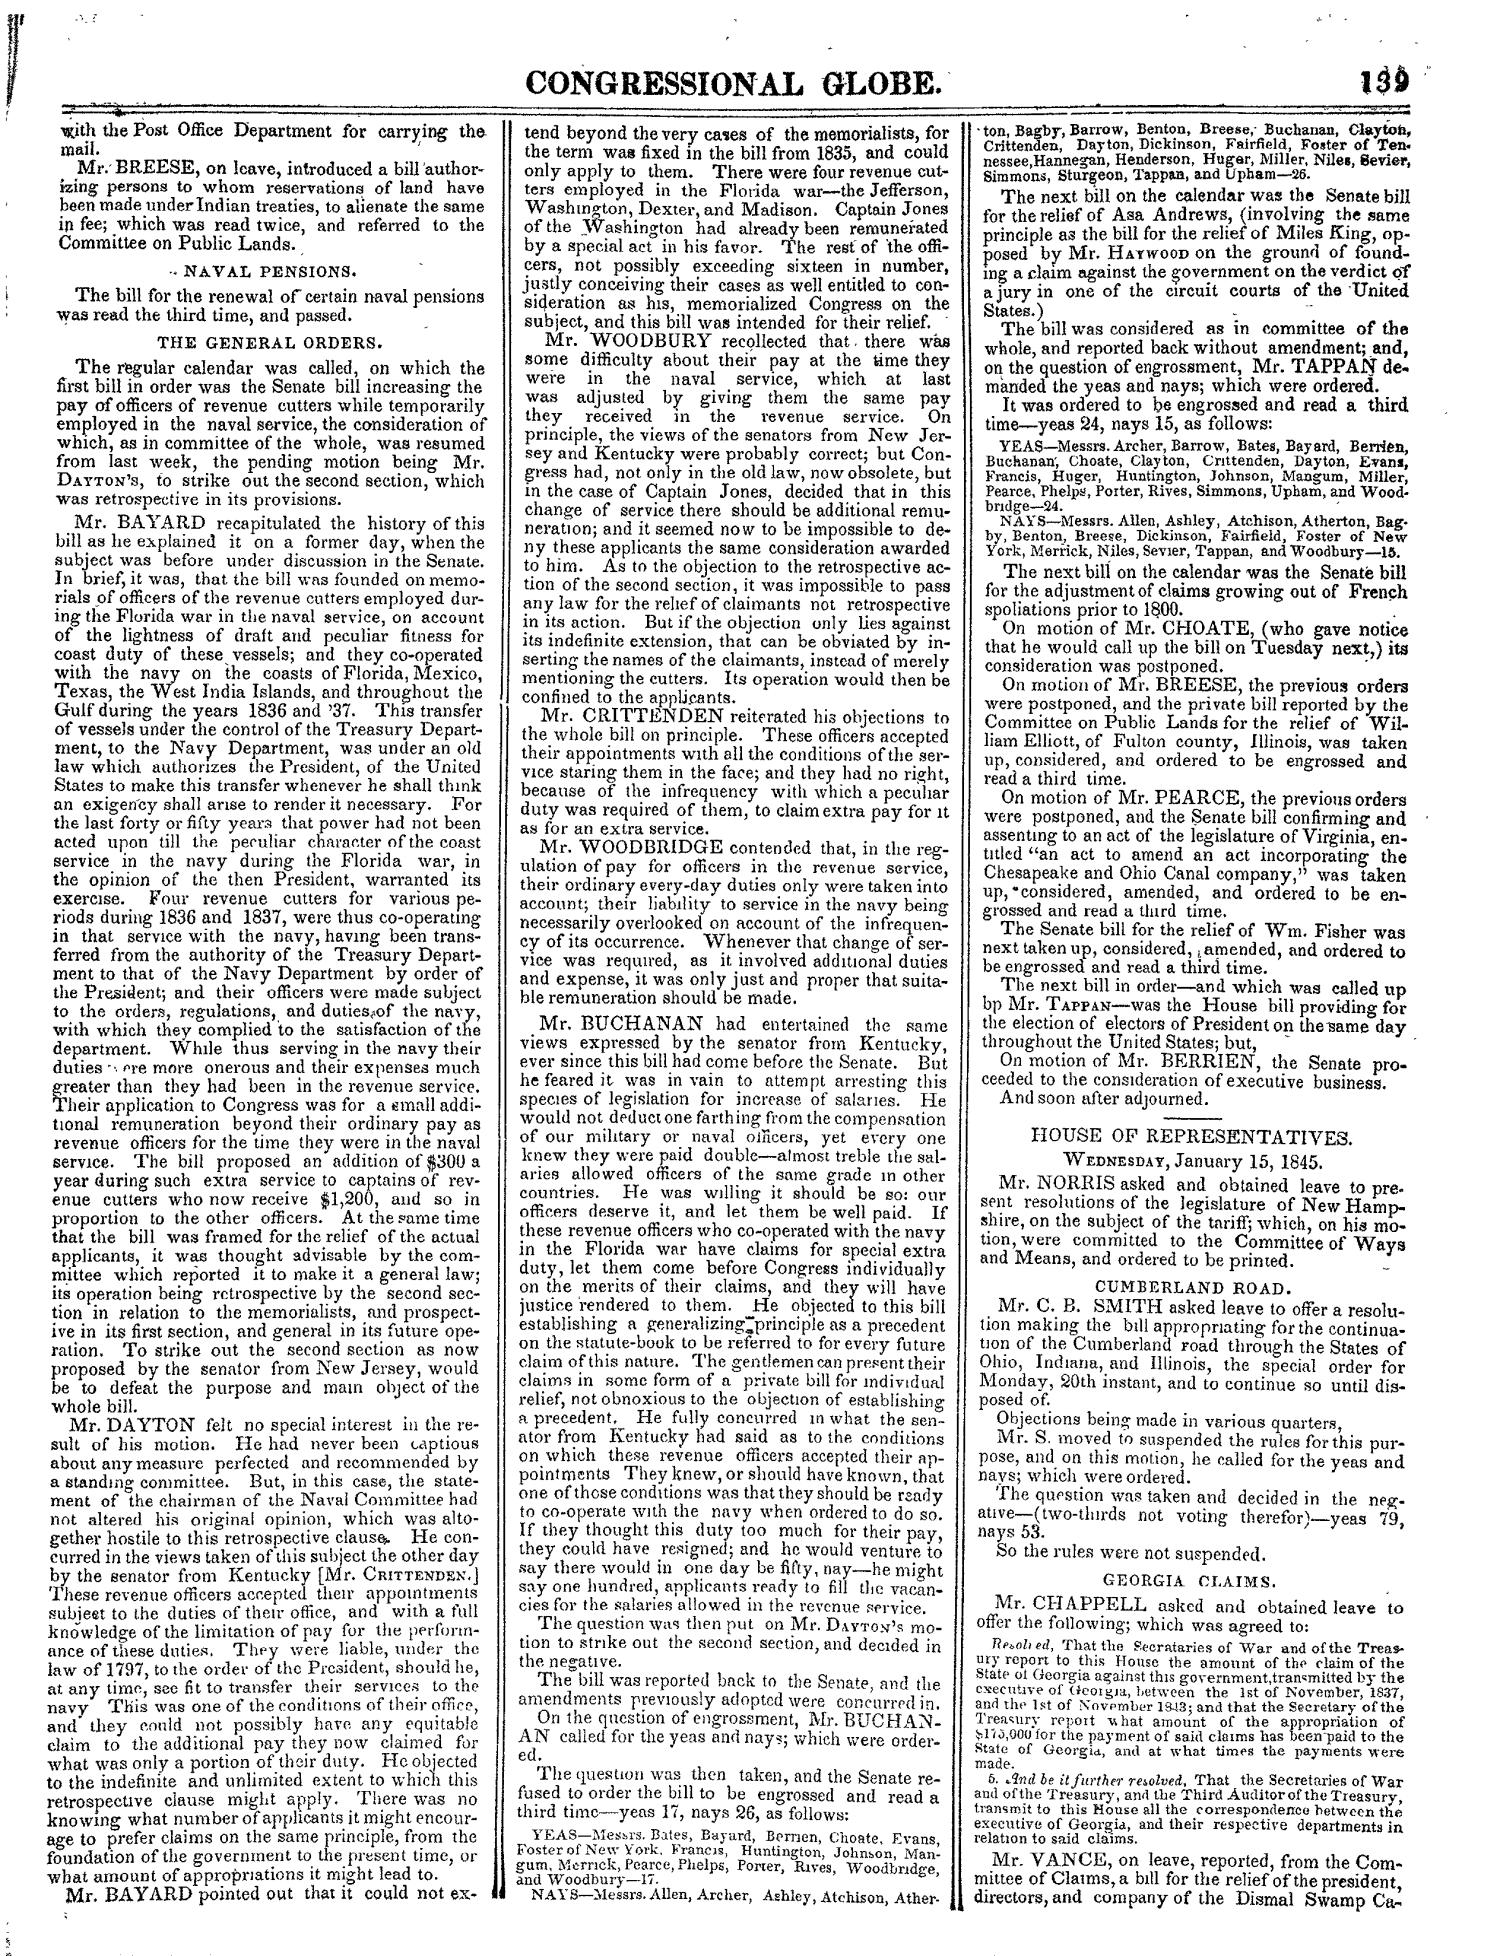 The Congressional Globe, Volume 14: Twenty-Eighth Congress, Second Session
                                                
                                                    139
                                                